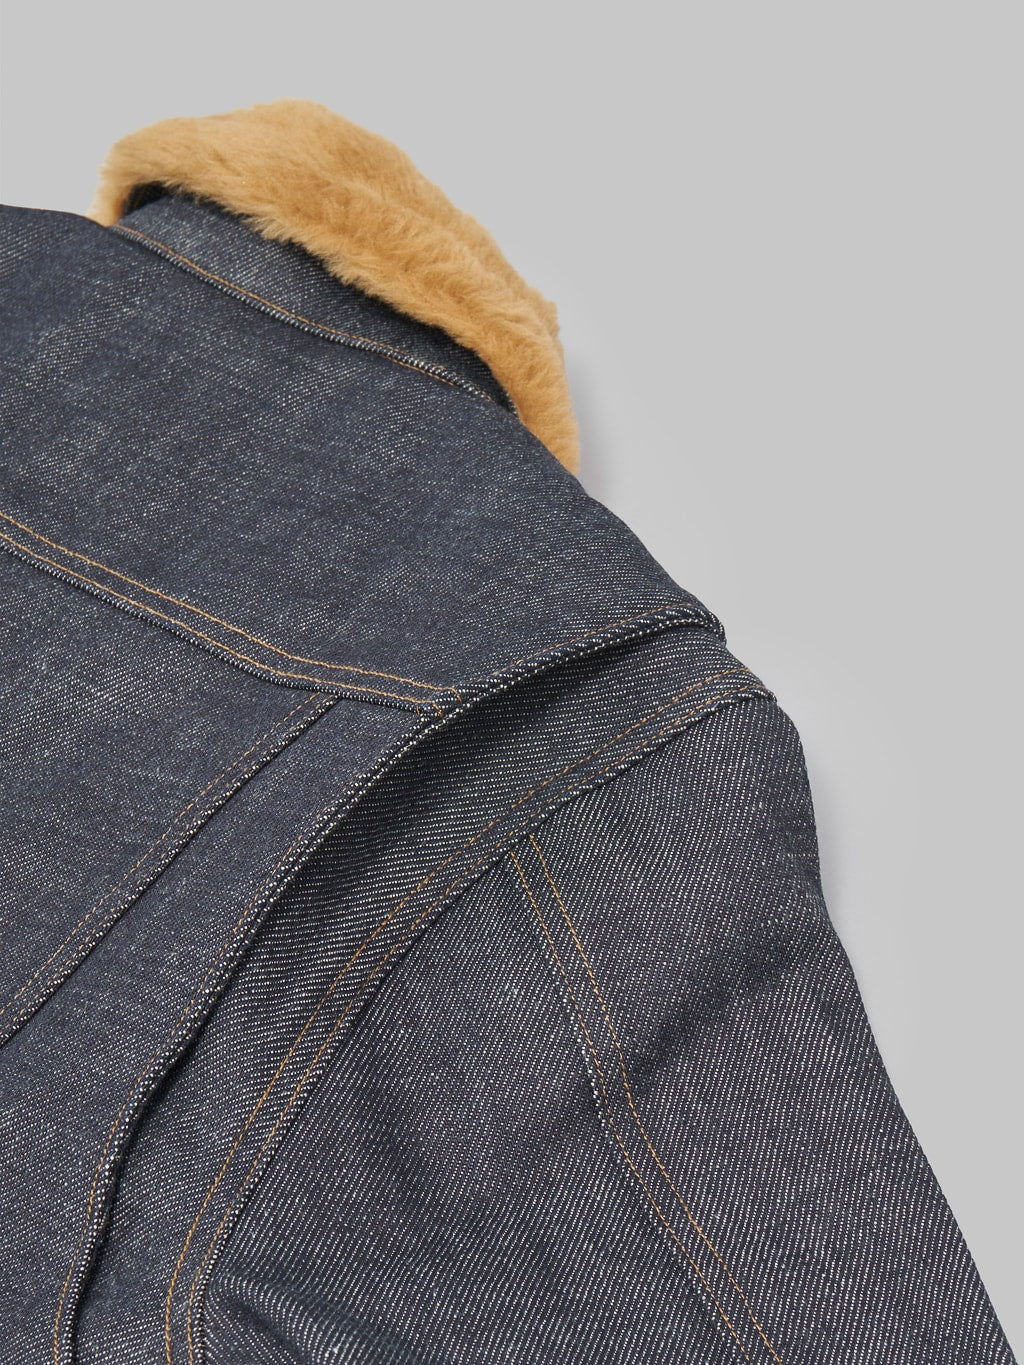 Freenote Cloth denim shearling jacket double needle stitching